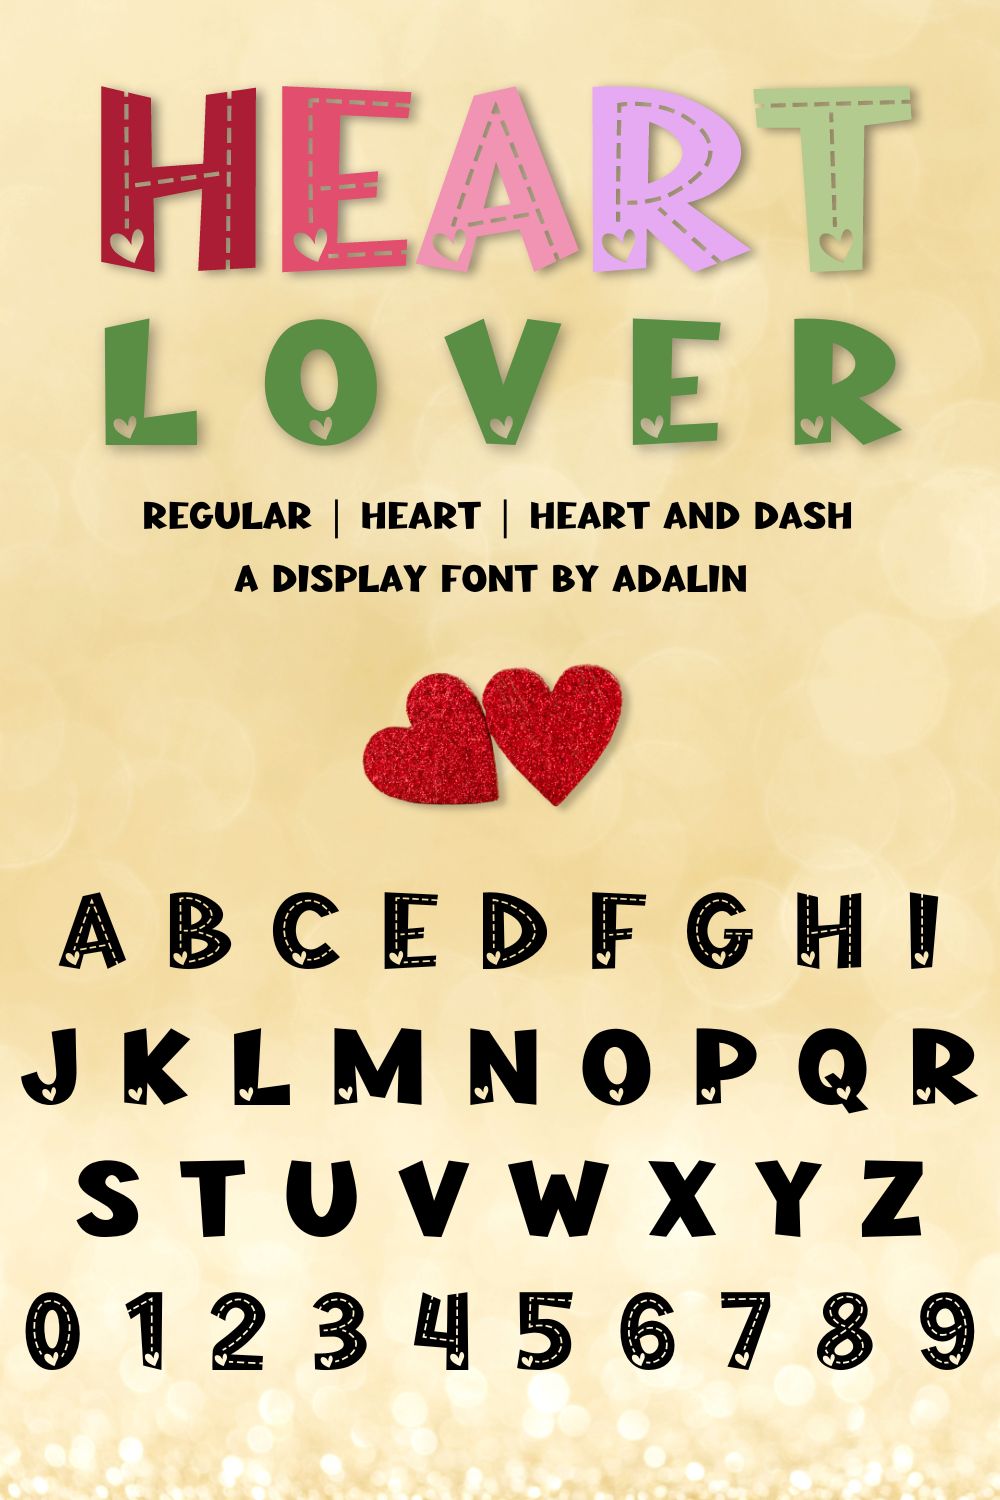 Heart Lover Font pinterest preview image.